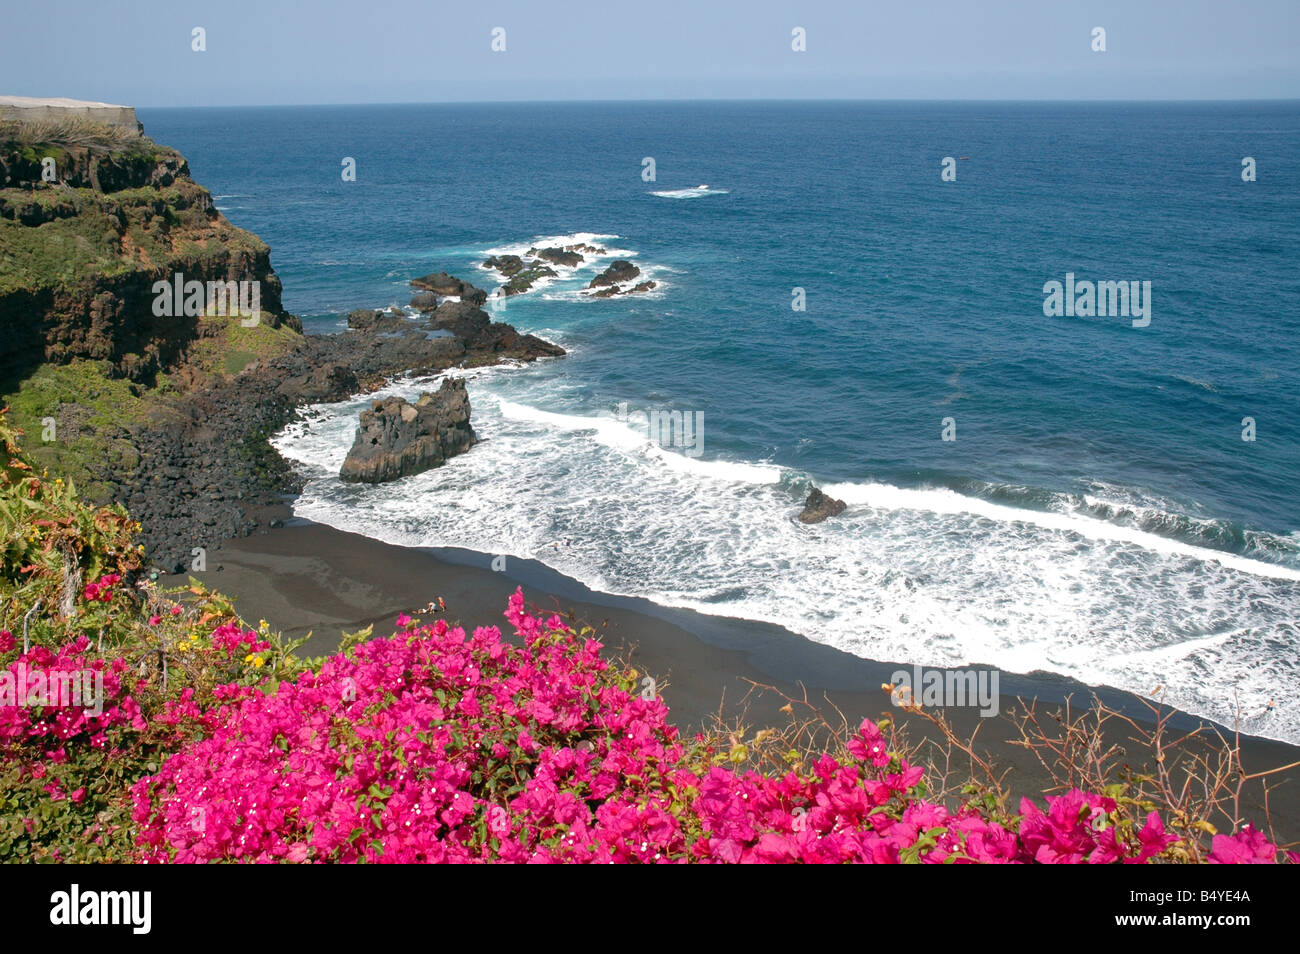 Playa bollullo tenerife fotografías e imágenes de alta resolución - Alamy